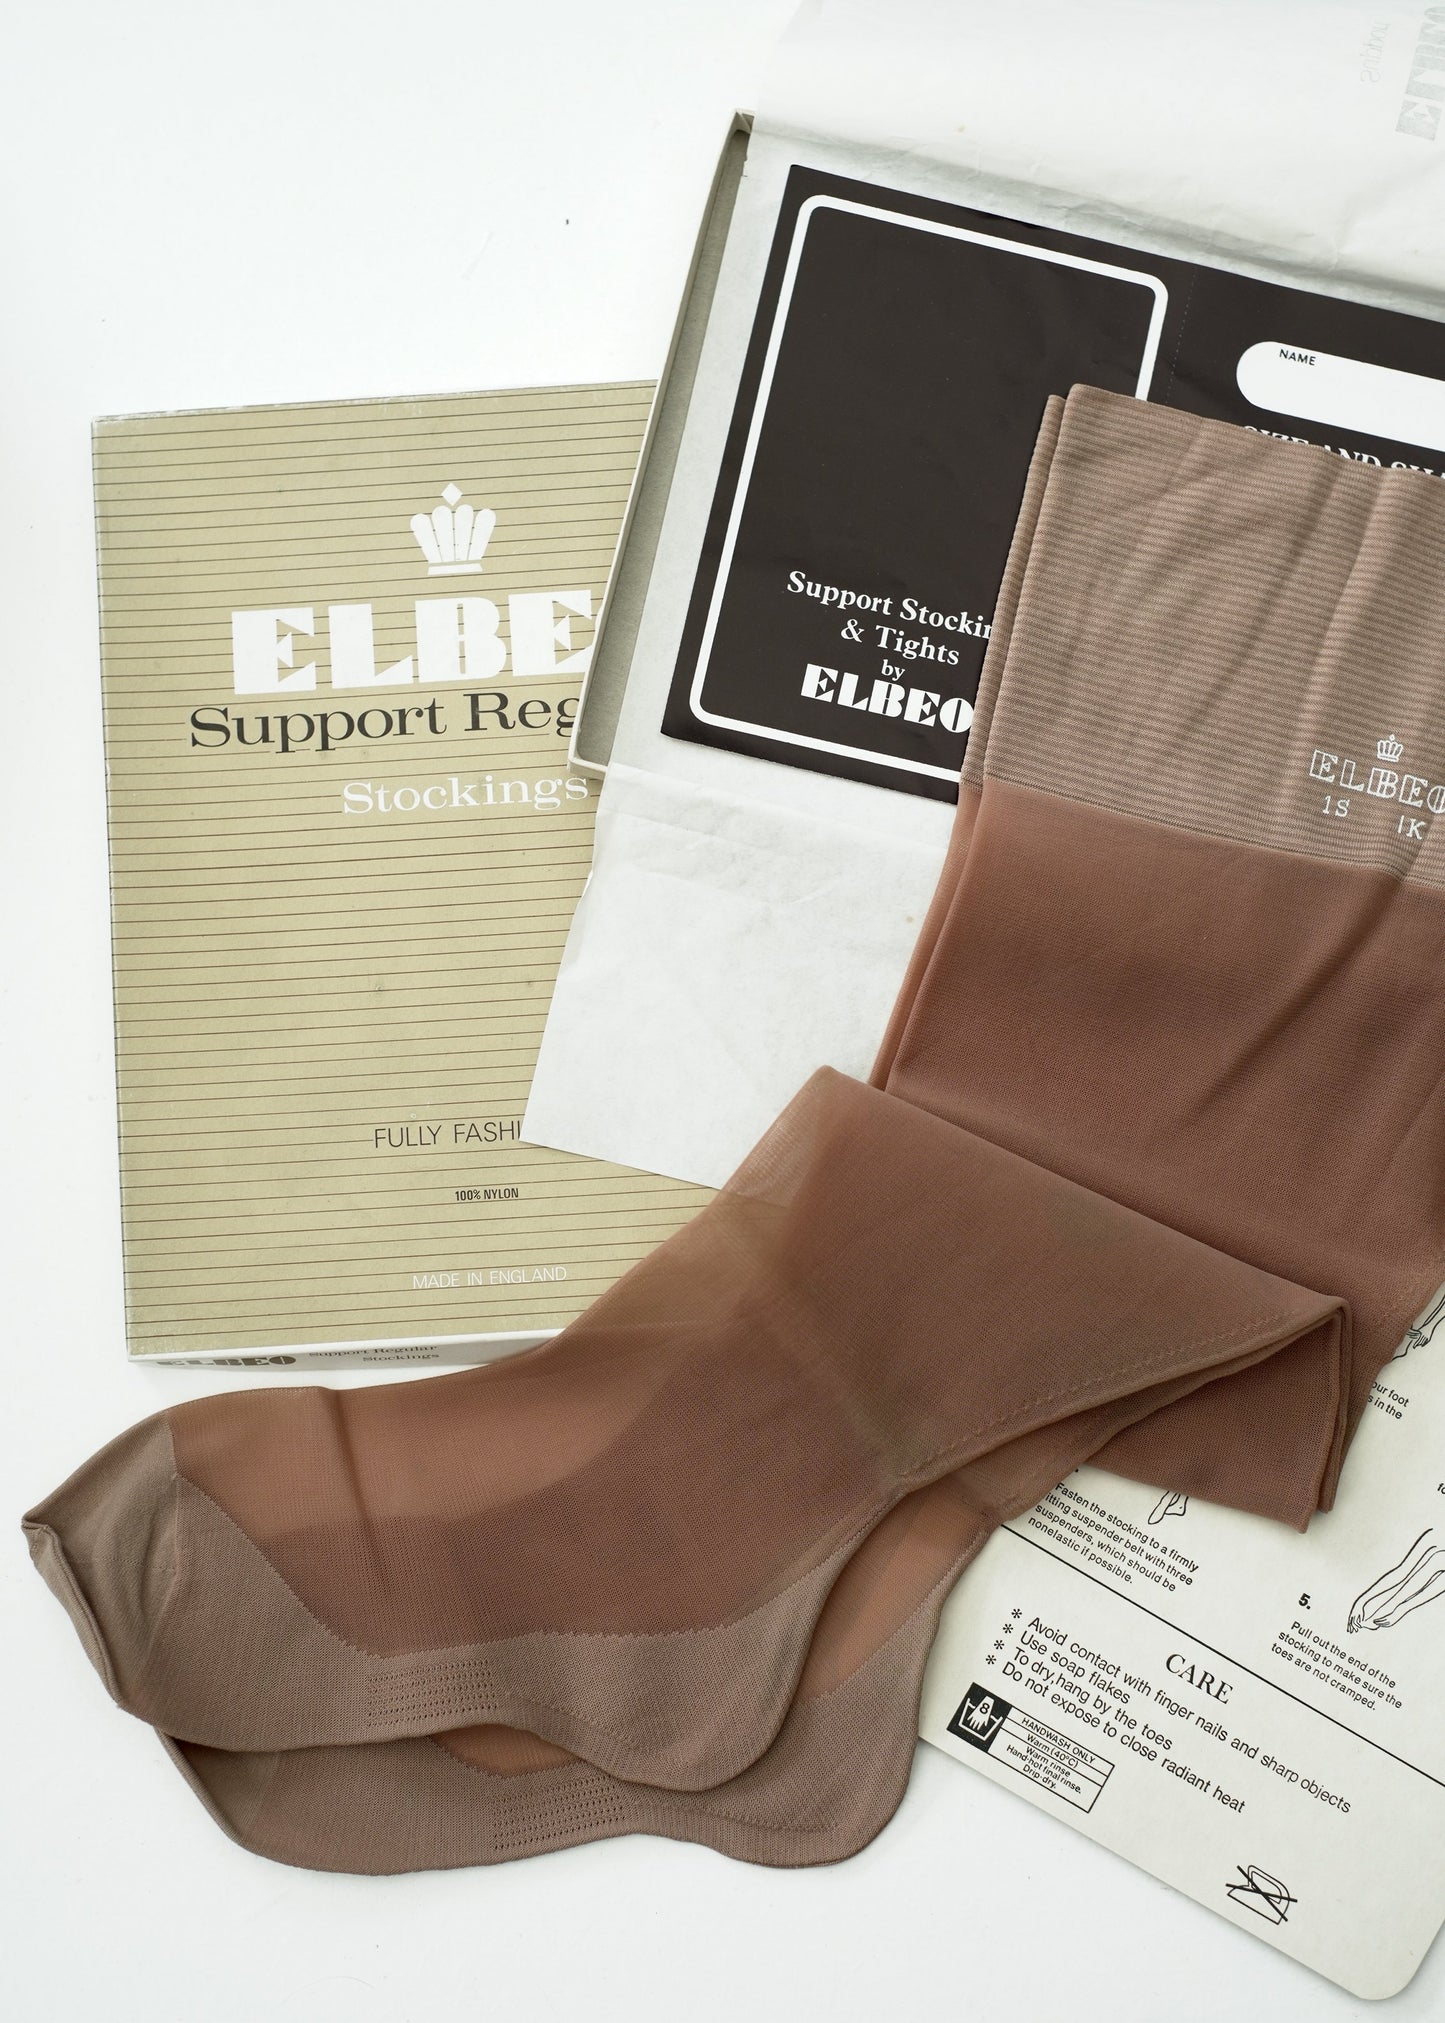 Original Vintage Elbeo Support Stockings • Original Box • Supp-hose®